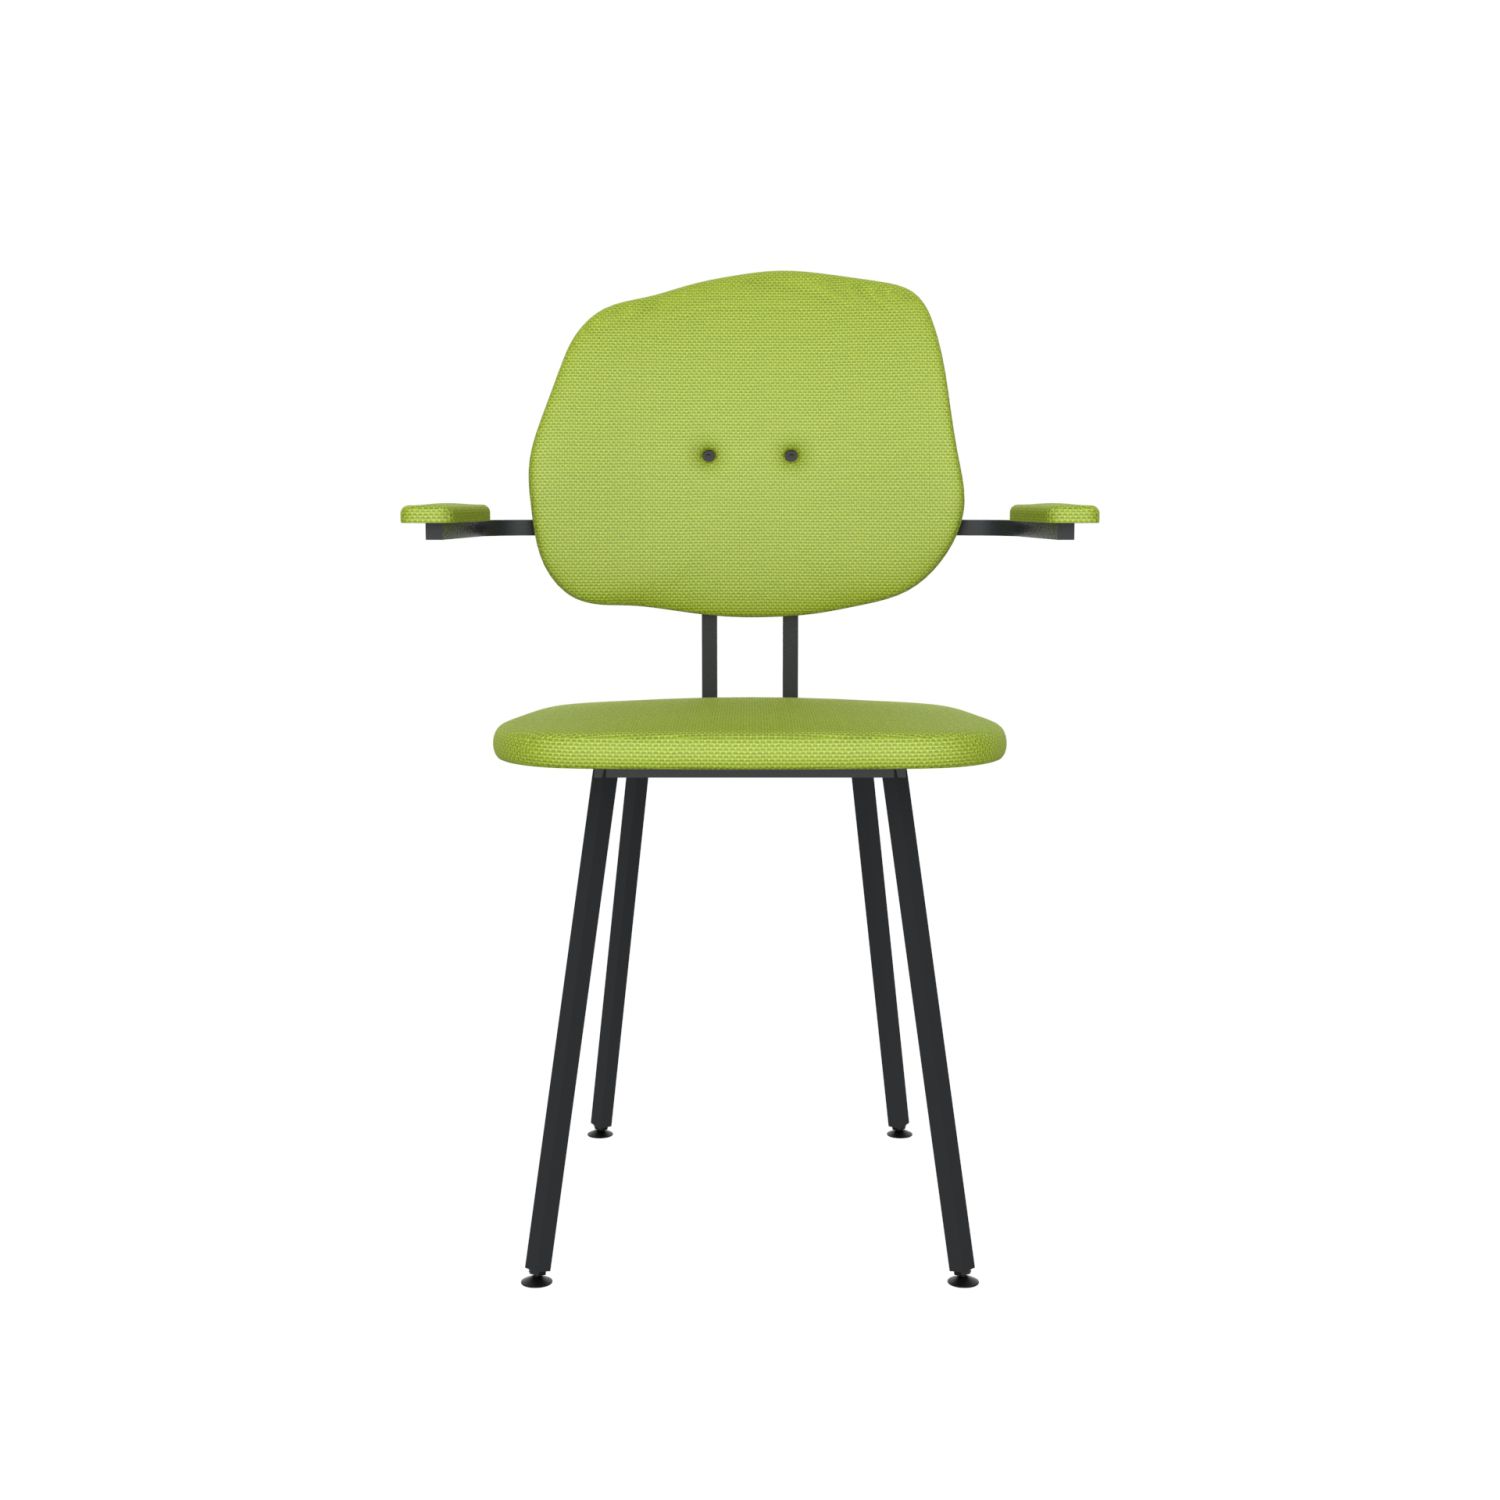 lensvelt maarten baas chair 102 not stackable with armrests backrest g fairway green 020 black ral9005 hard leg ends